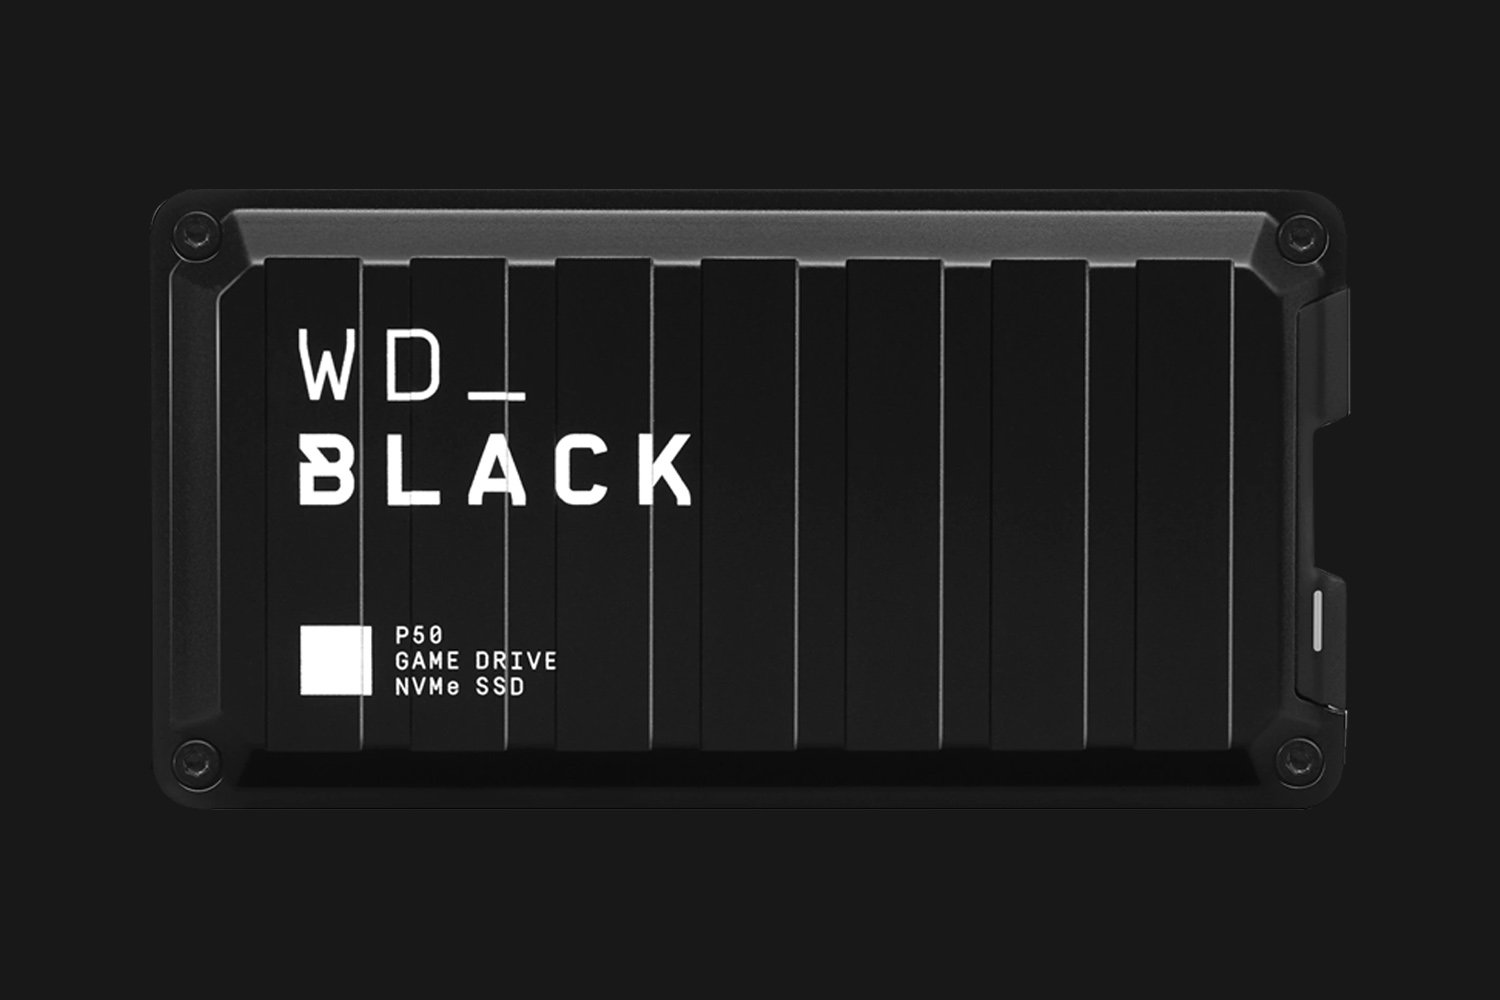 WD_Black 500GB P50 Game Drive